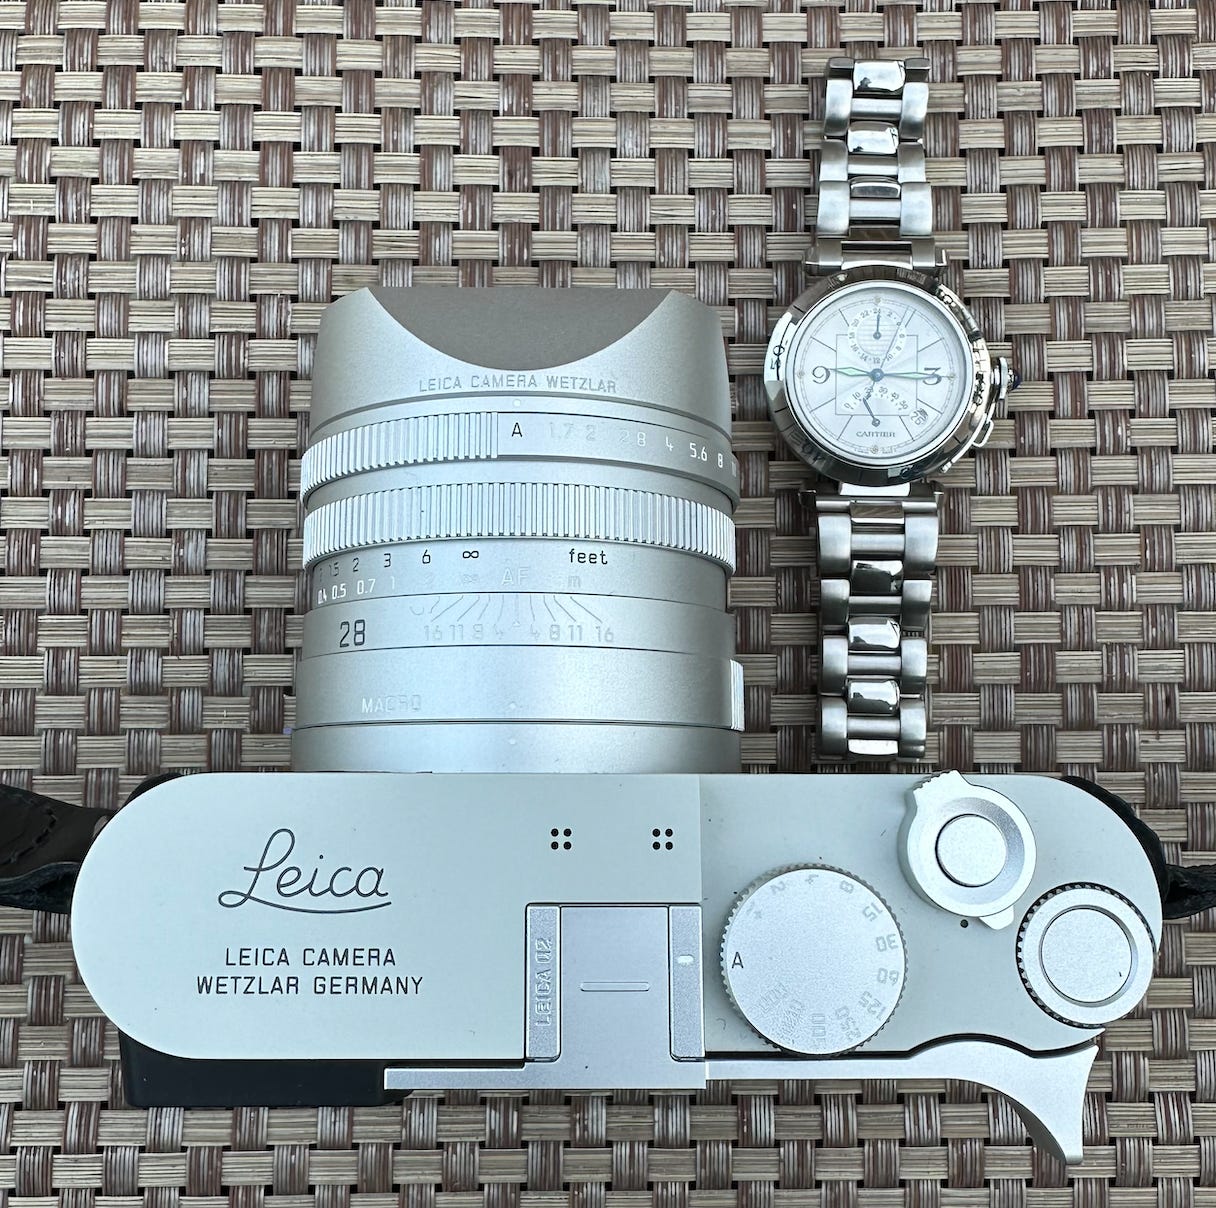 Hodinkee x Leica M10-P Ghost Edition